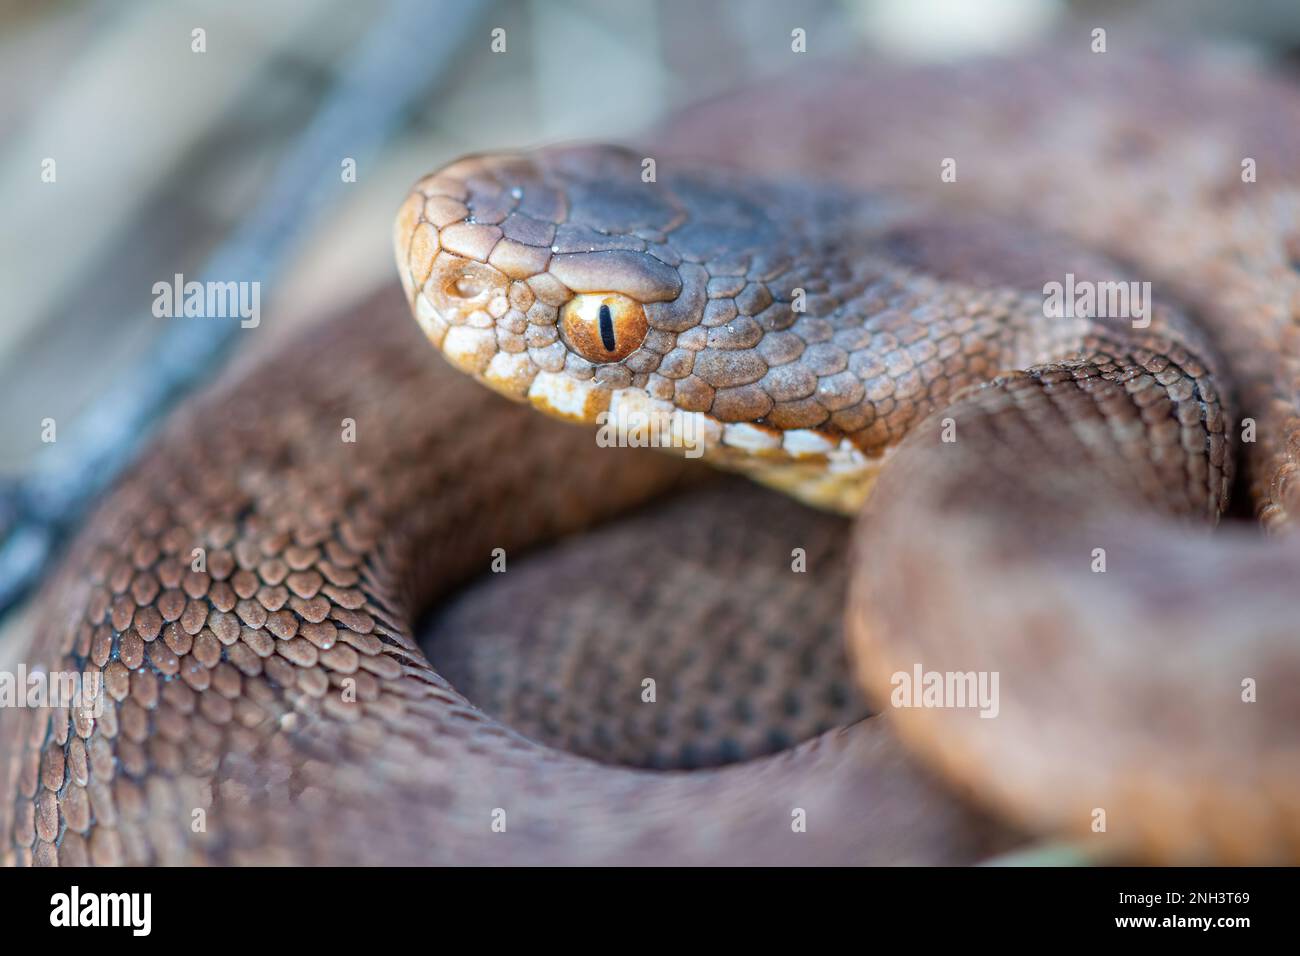 Adder (Vipera berus) - close-up of the eye of a juvenile snake, England, UK Stock Photo